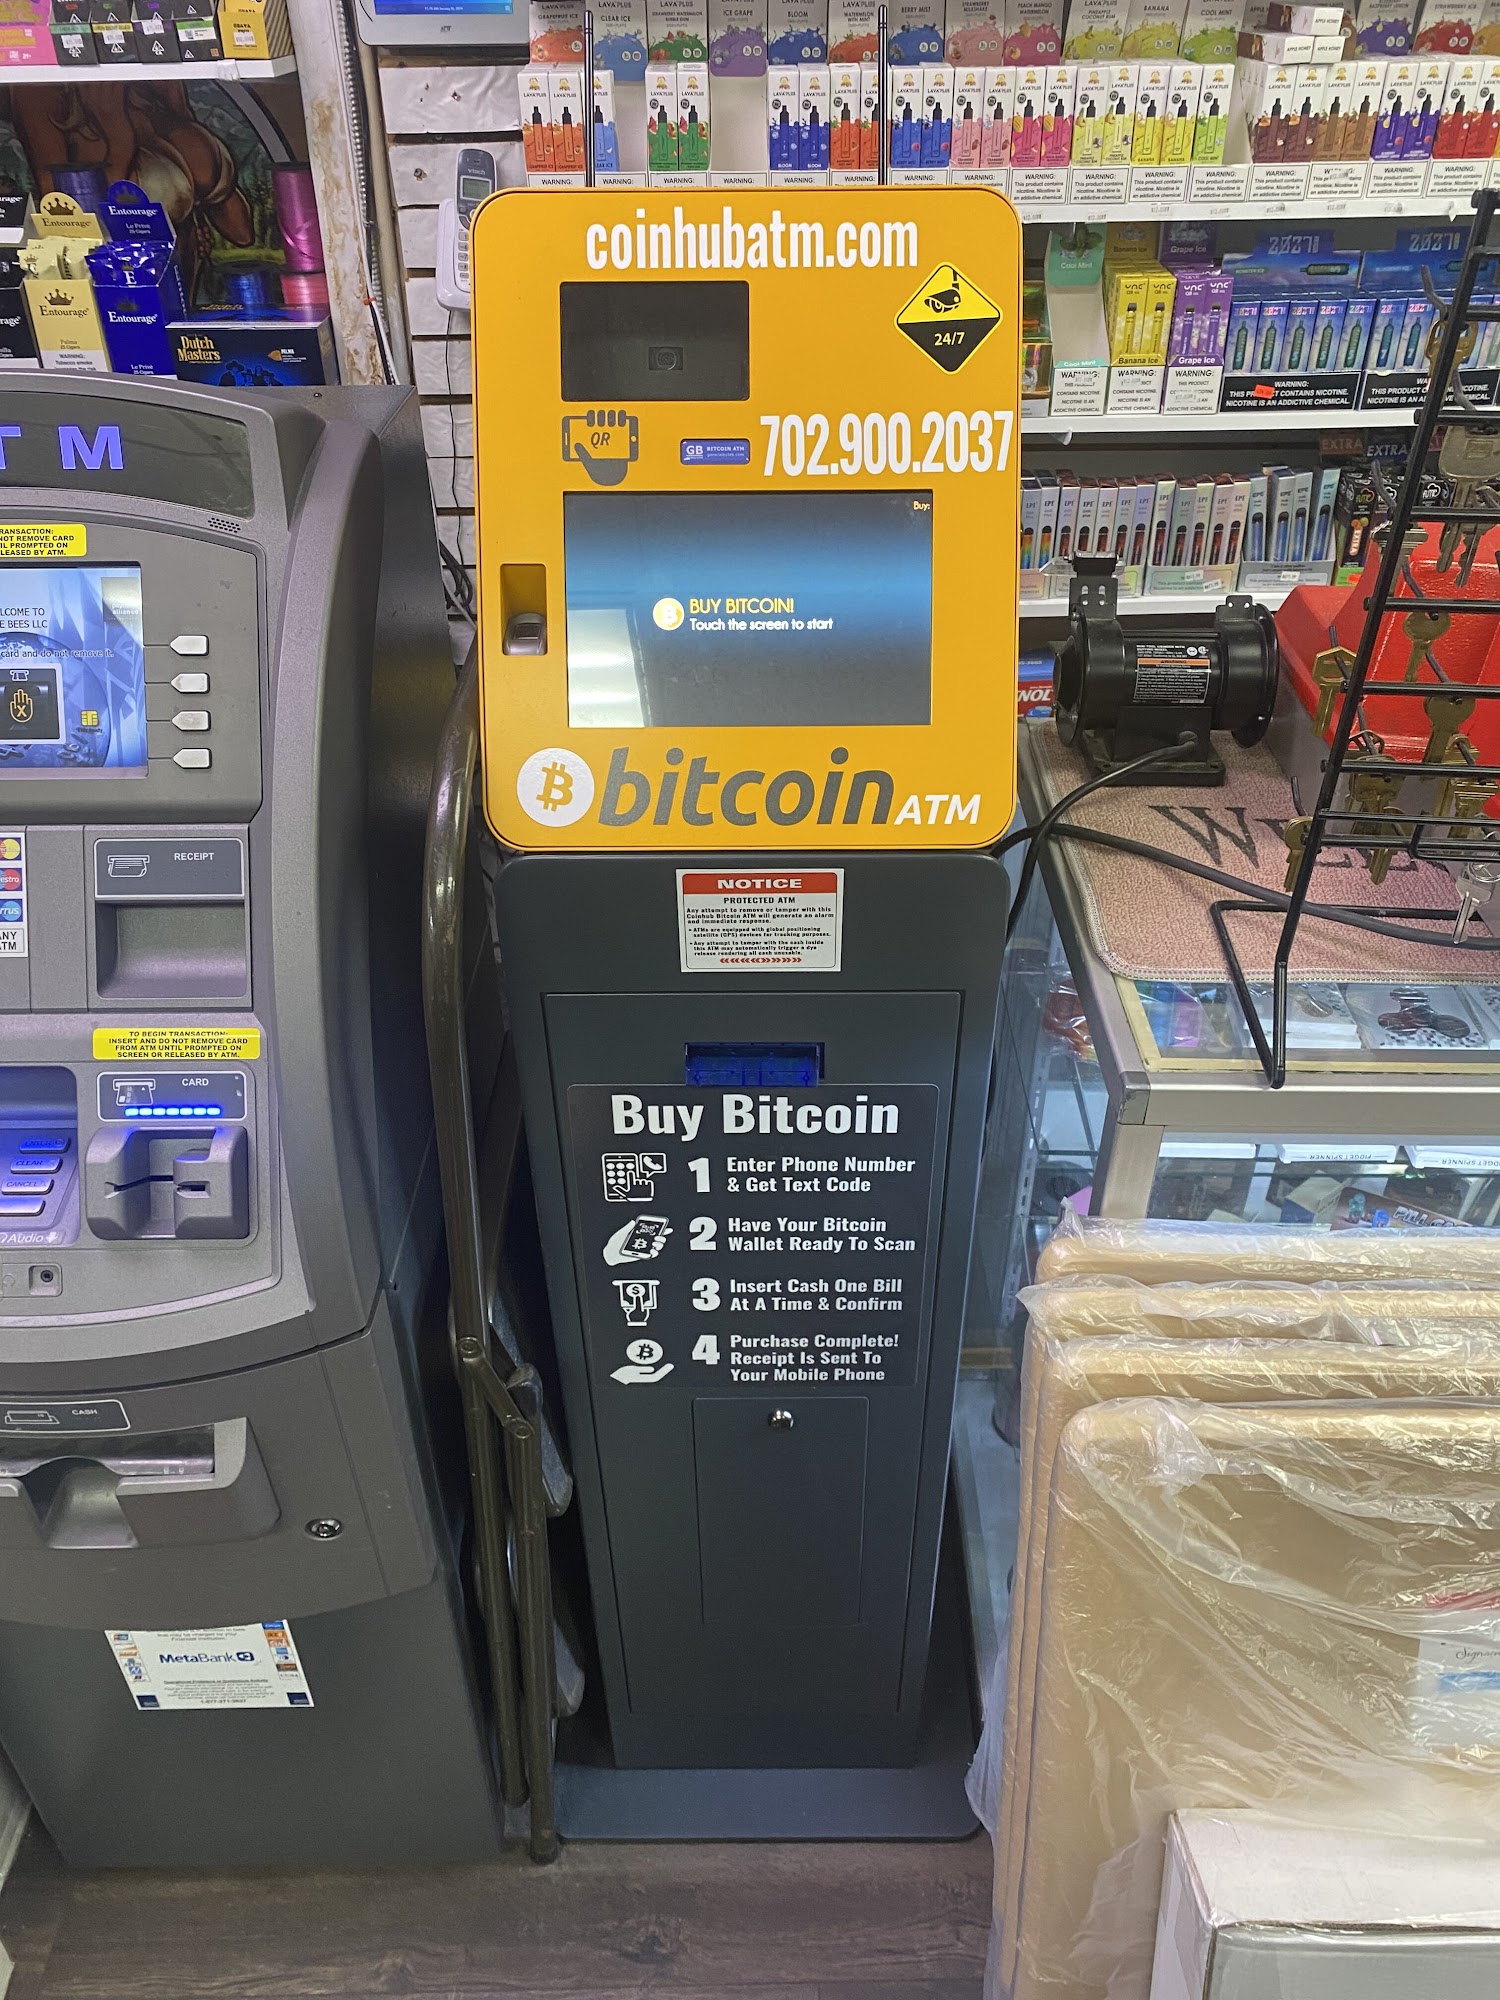 Bitcoin ATM Elizabeth - Coinhub